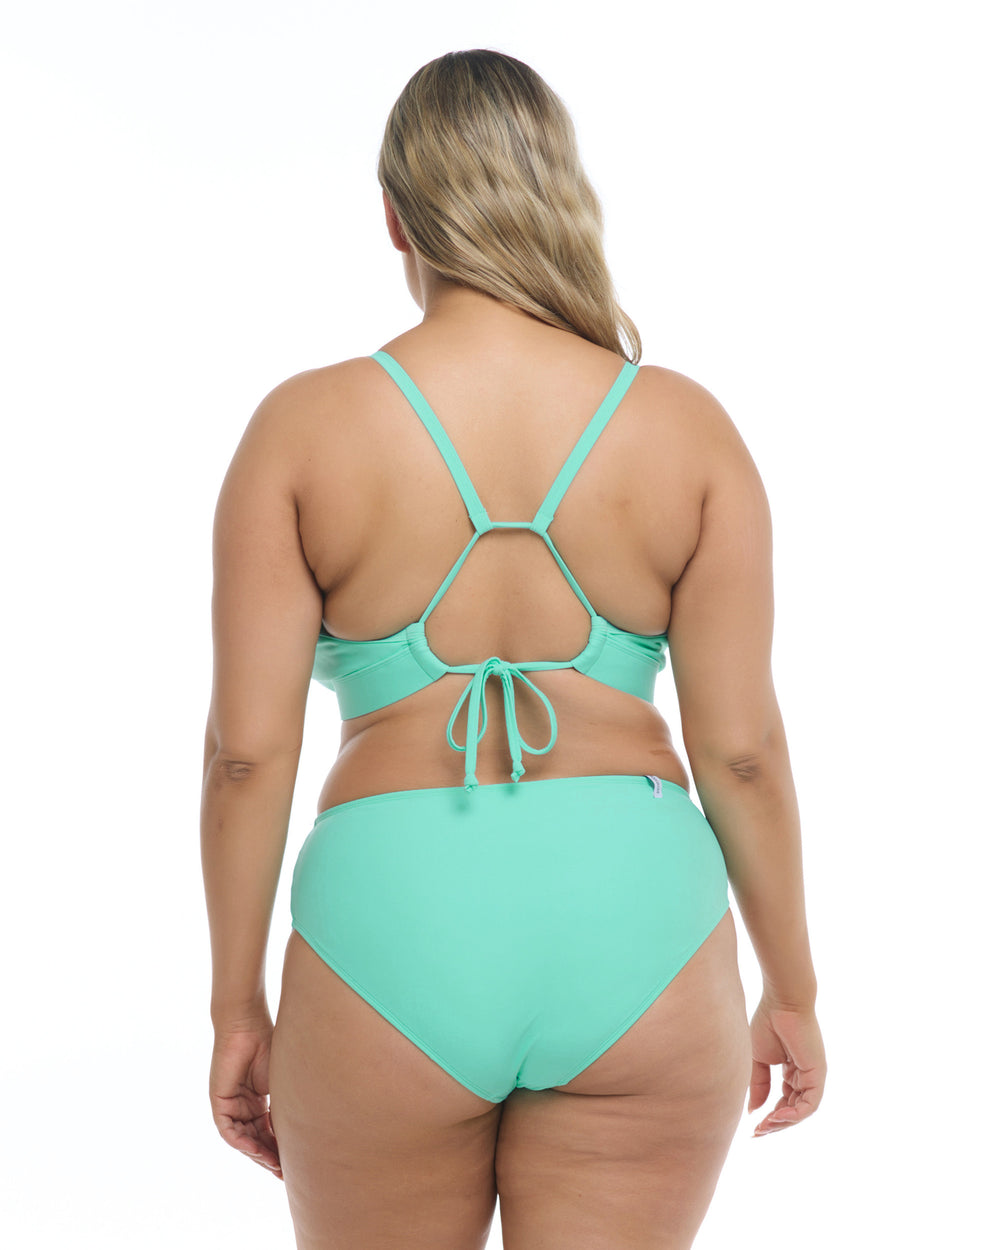 Body Glove Women's Drew Plus Bikini Top Swimsuit with Adjustable Tie Back,  Available in Sizes 1x, 2X, 3X